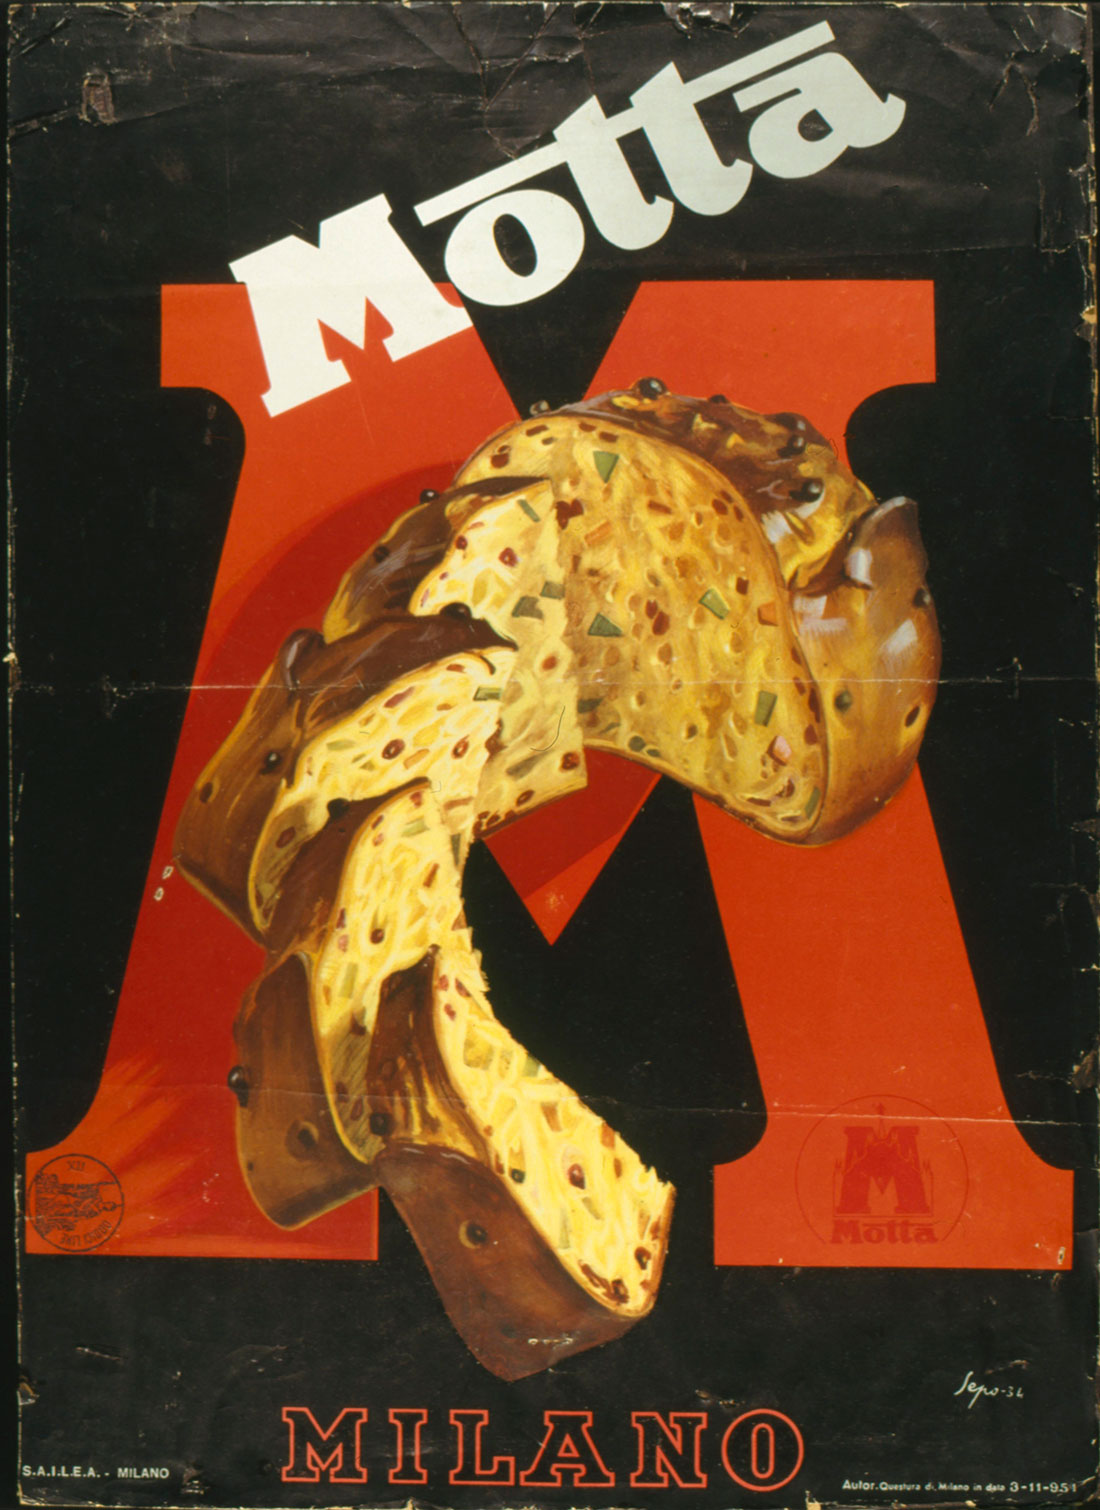 Poster design for the Motta bakery in Milan, by Sepo, 1934.